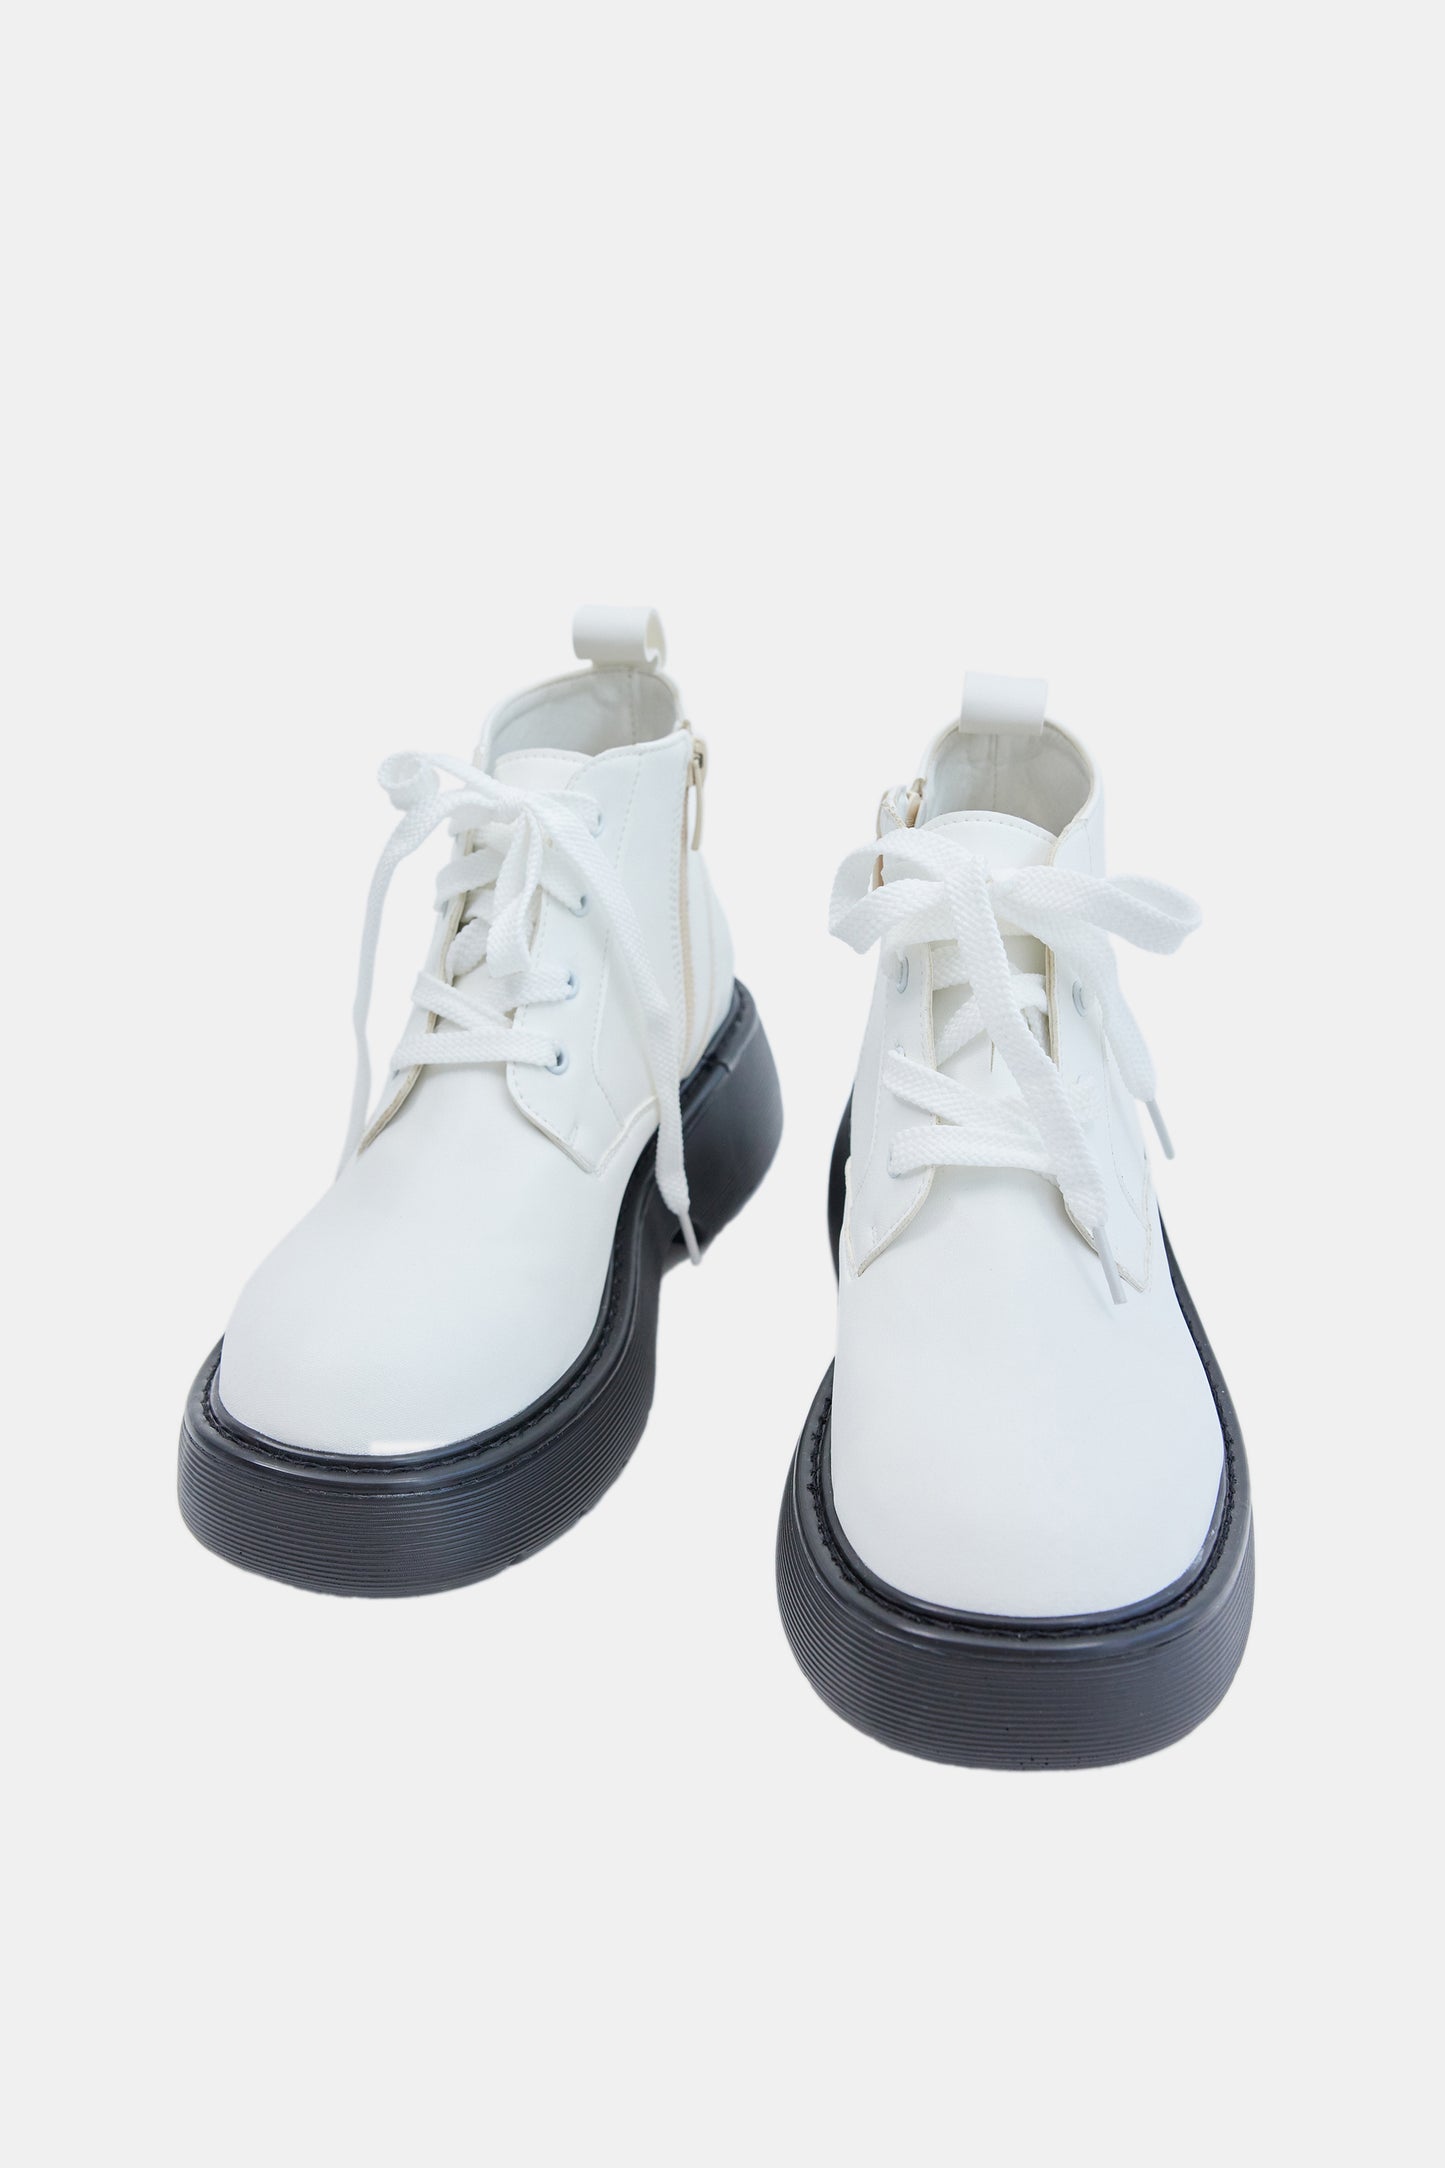 Combat Lace Up Boots, White & Black